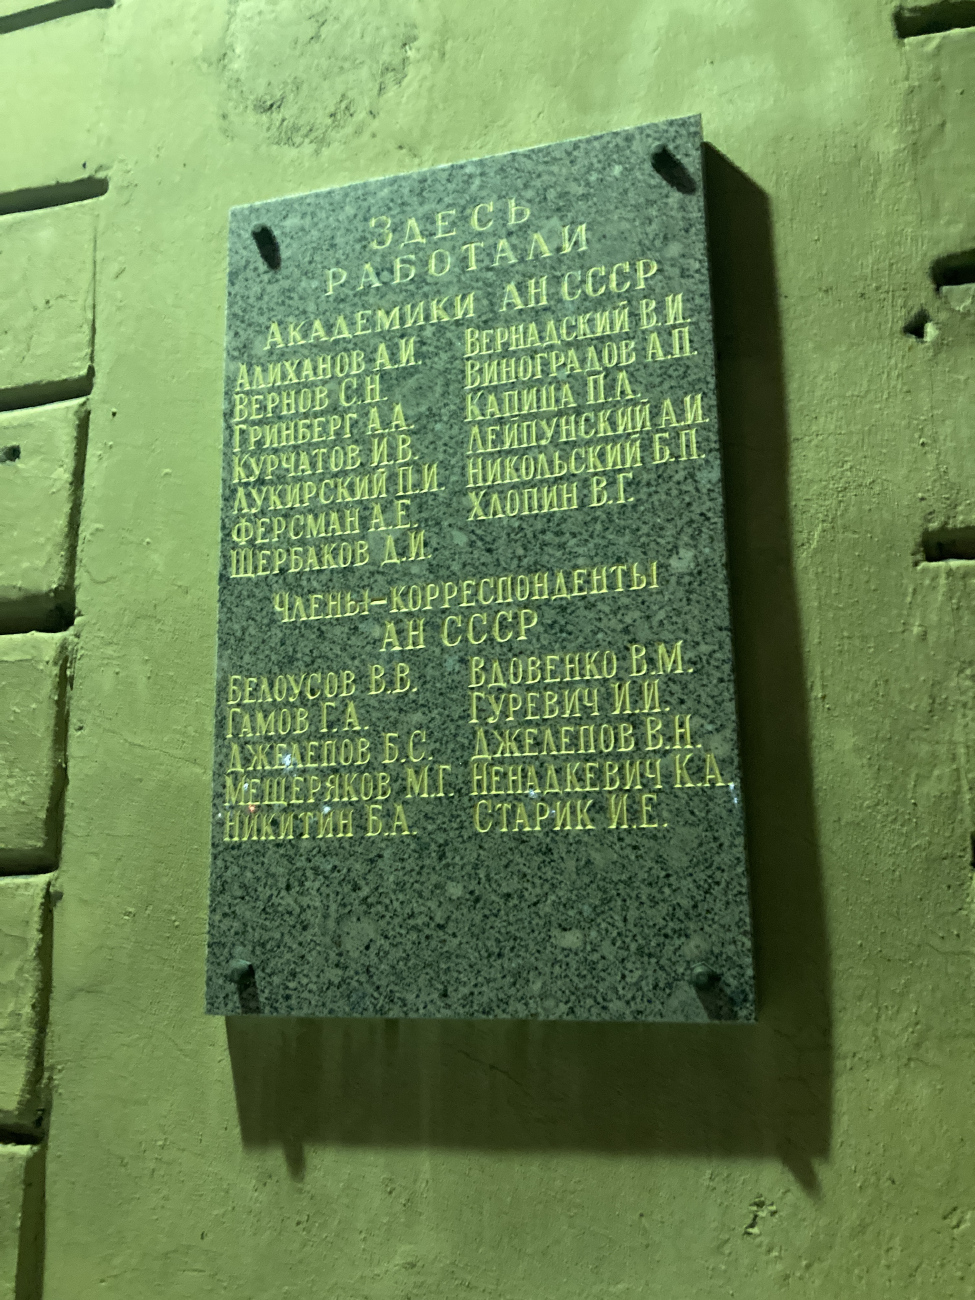 Saint Petersburg, Улица Рентгена, 1. Saint Petersburg — Memorial plaques